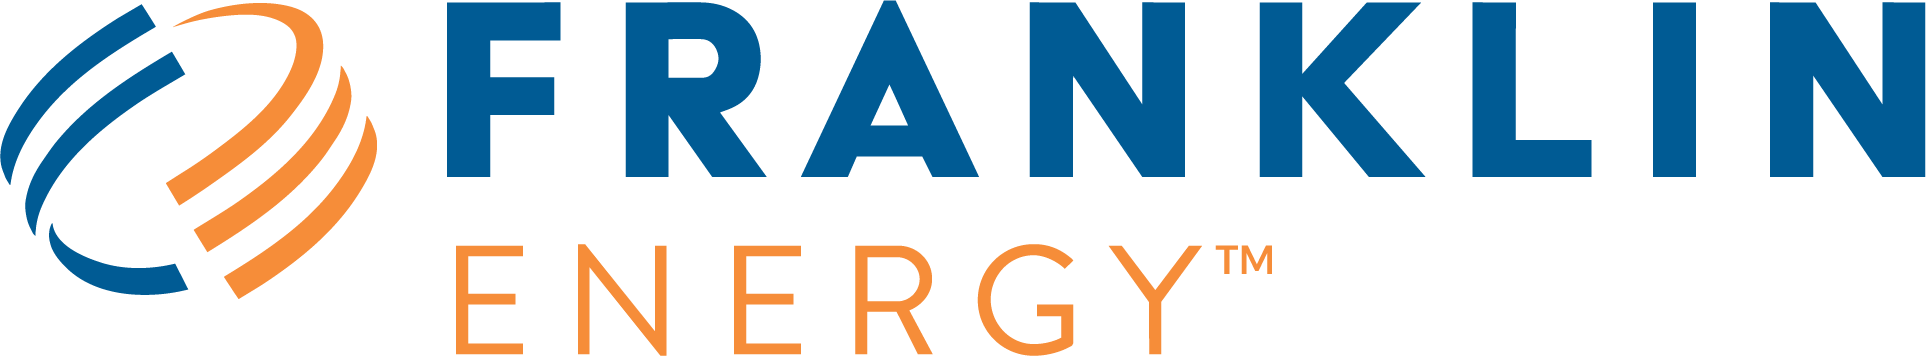 Franklin Energy Group